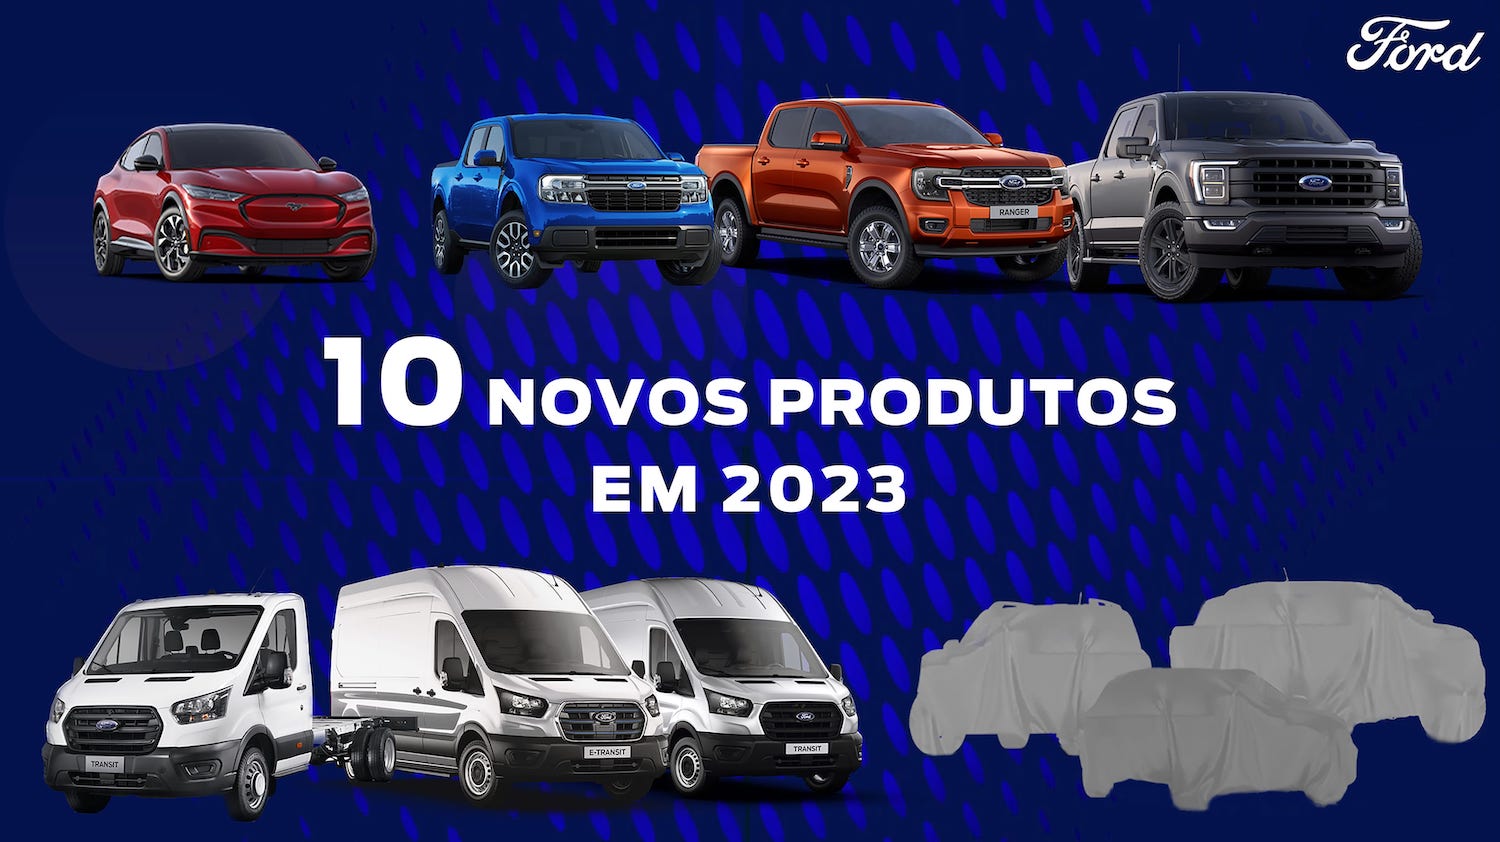 TRANSIT VAN 2023  Ford Country Americas